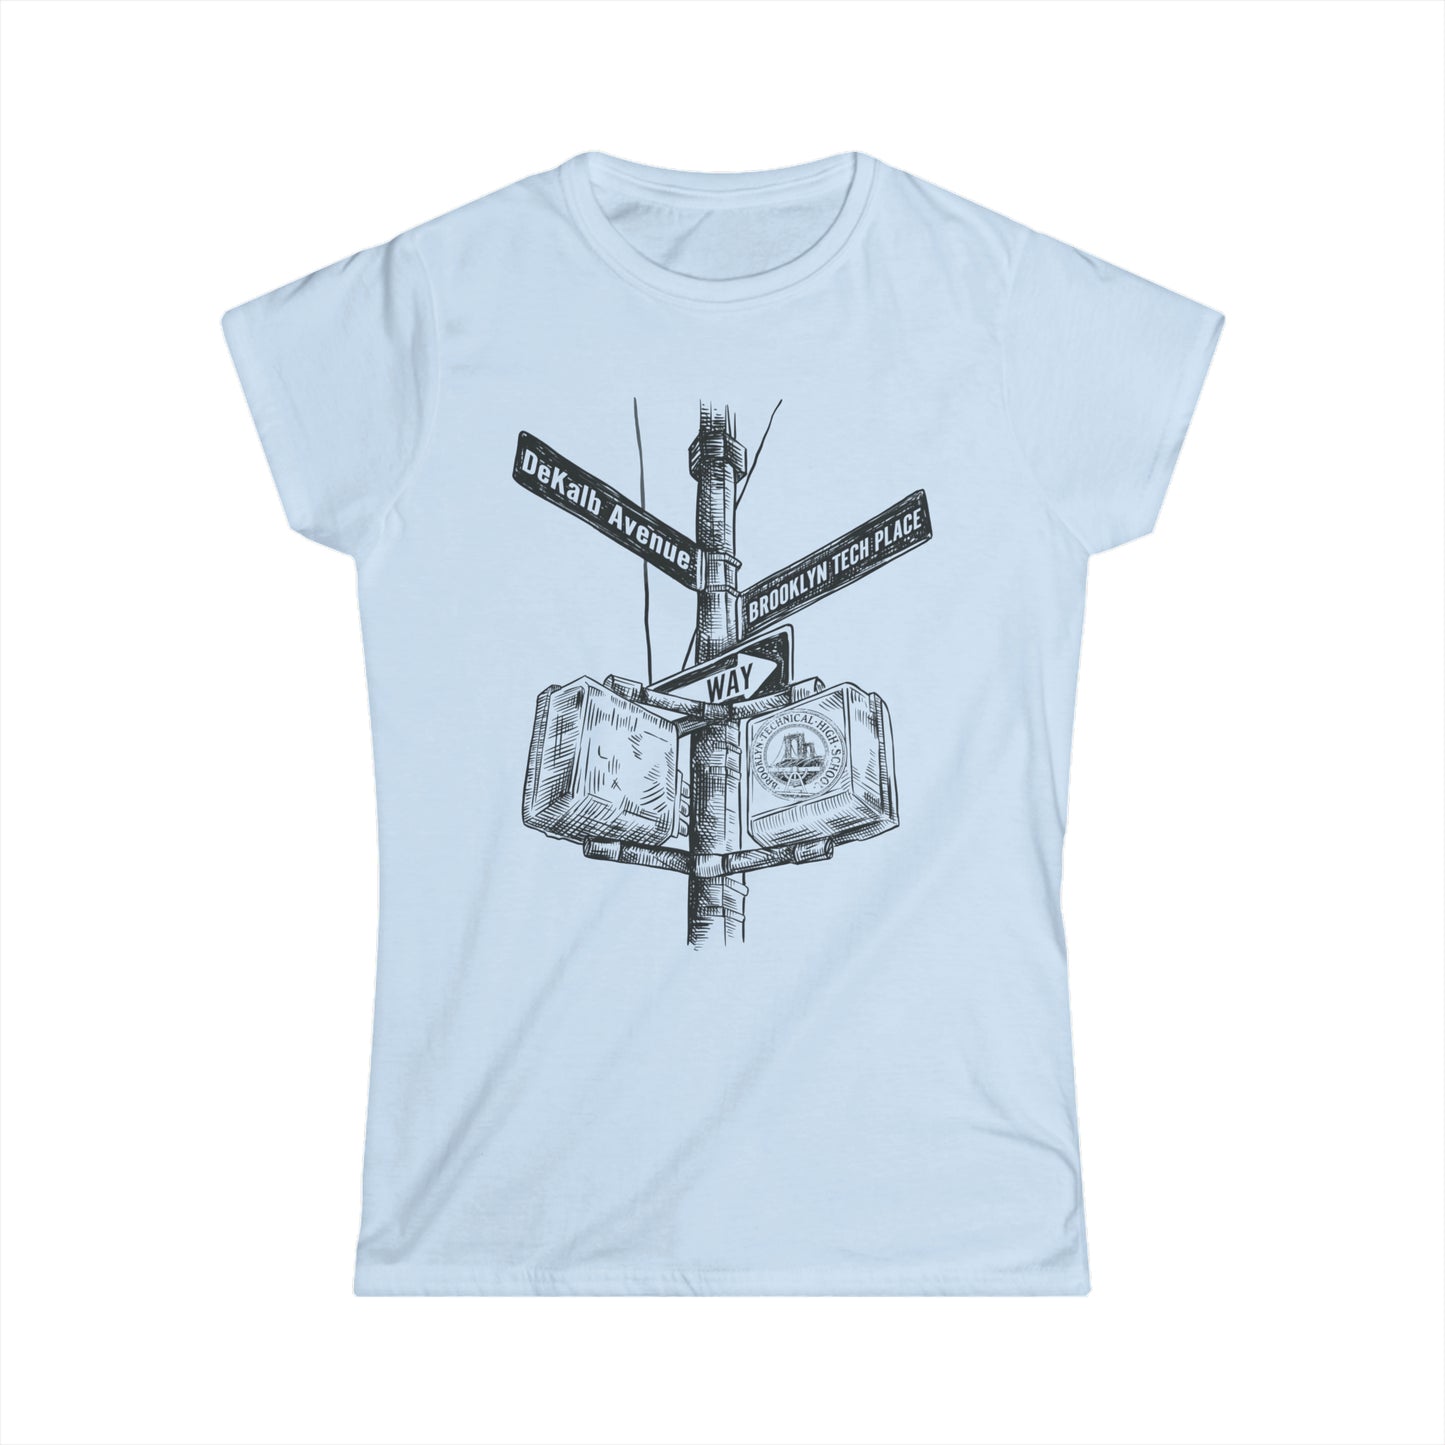 Boutique - Dekalb Ave & Brooklyn Tech Pl - Ladies Softstyle T-Shirt - (black Graphic)